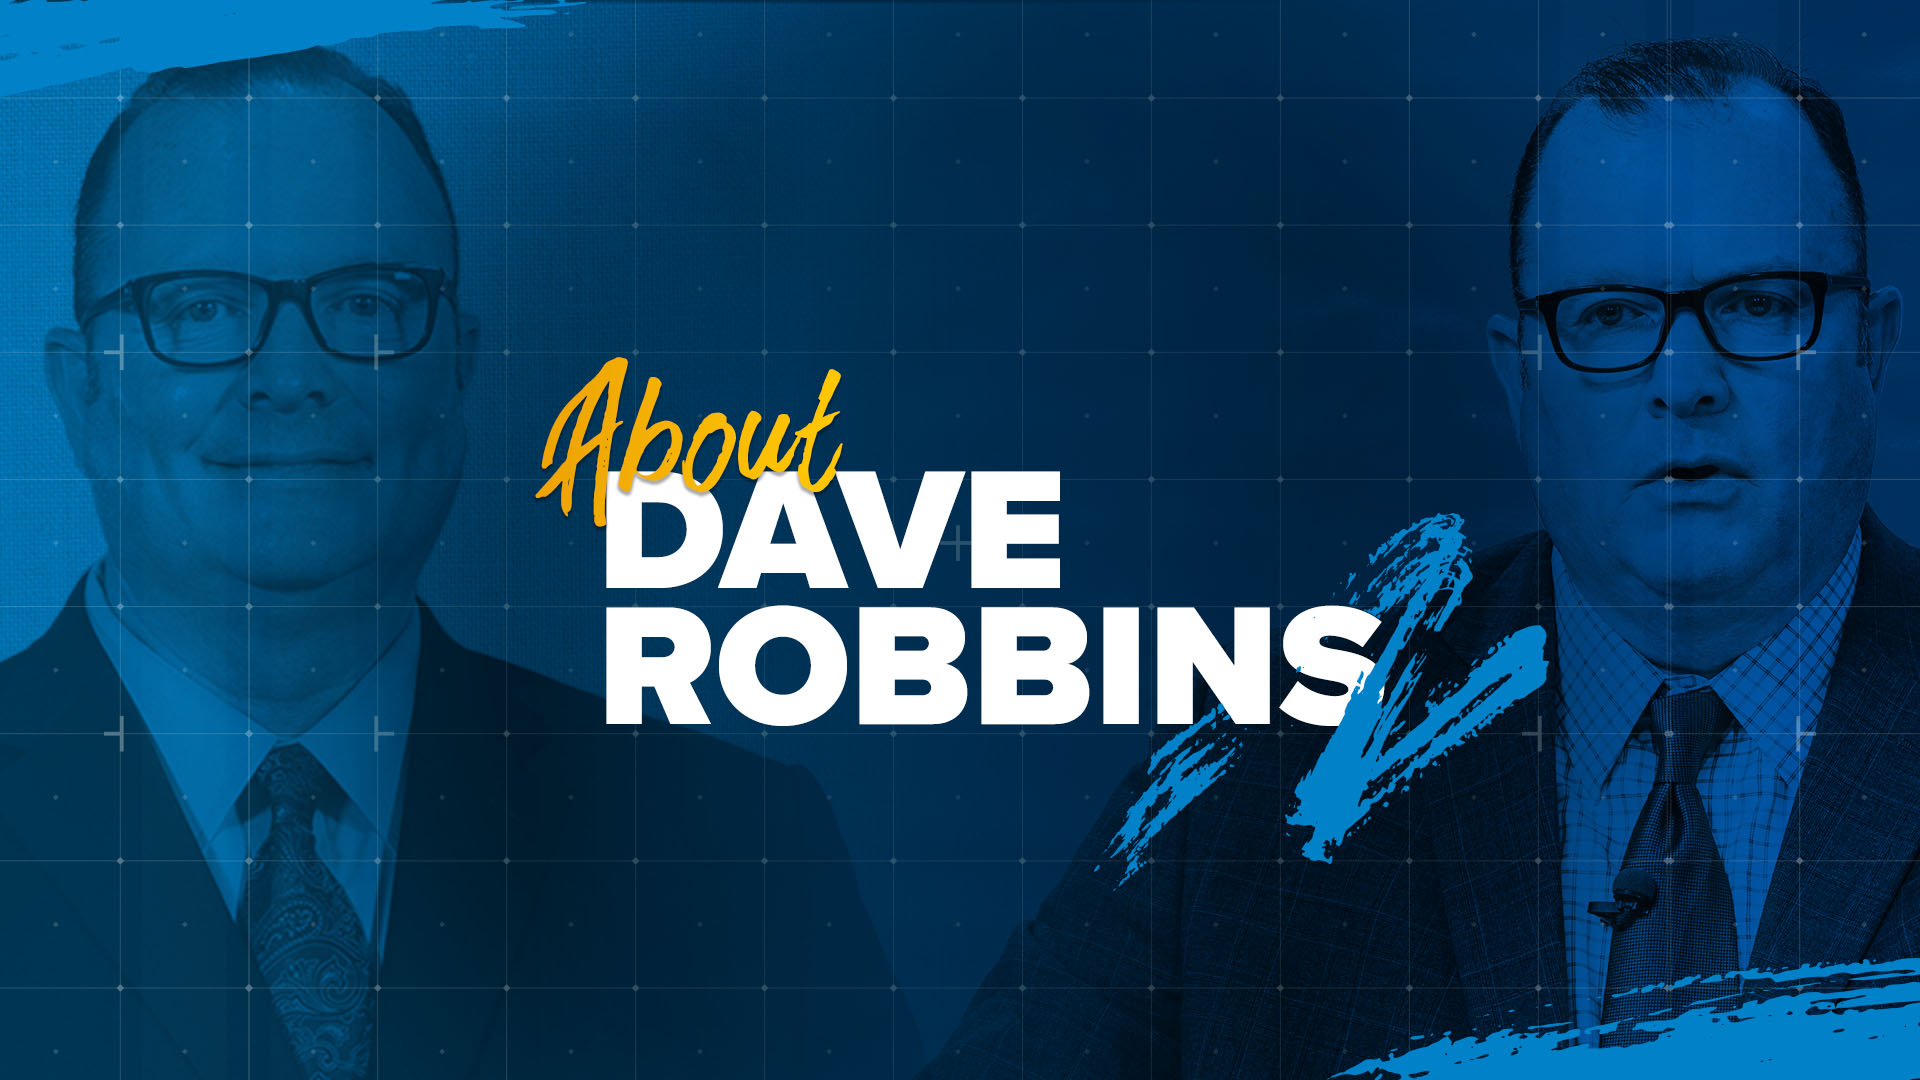 Dave Robbins